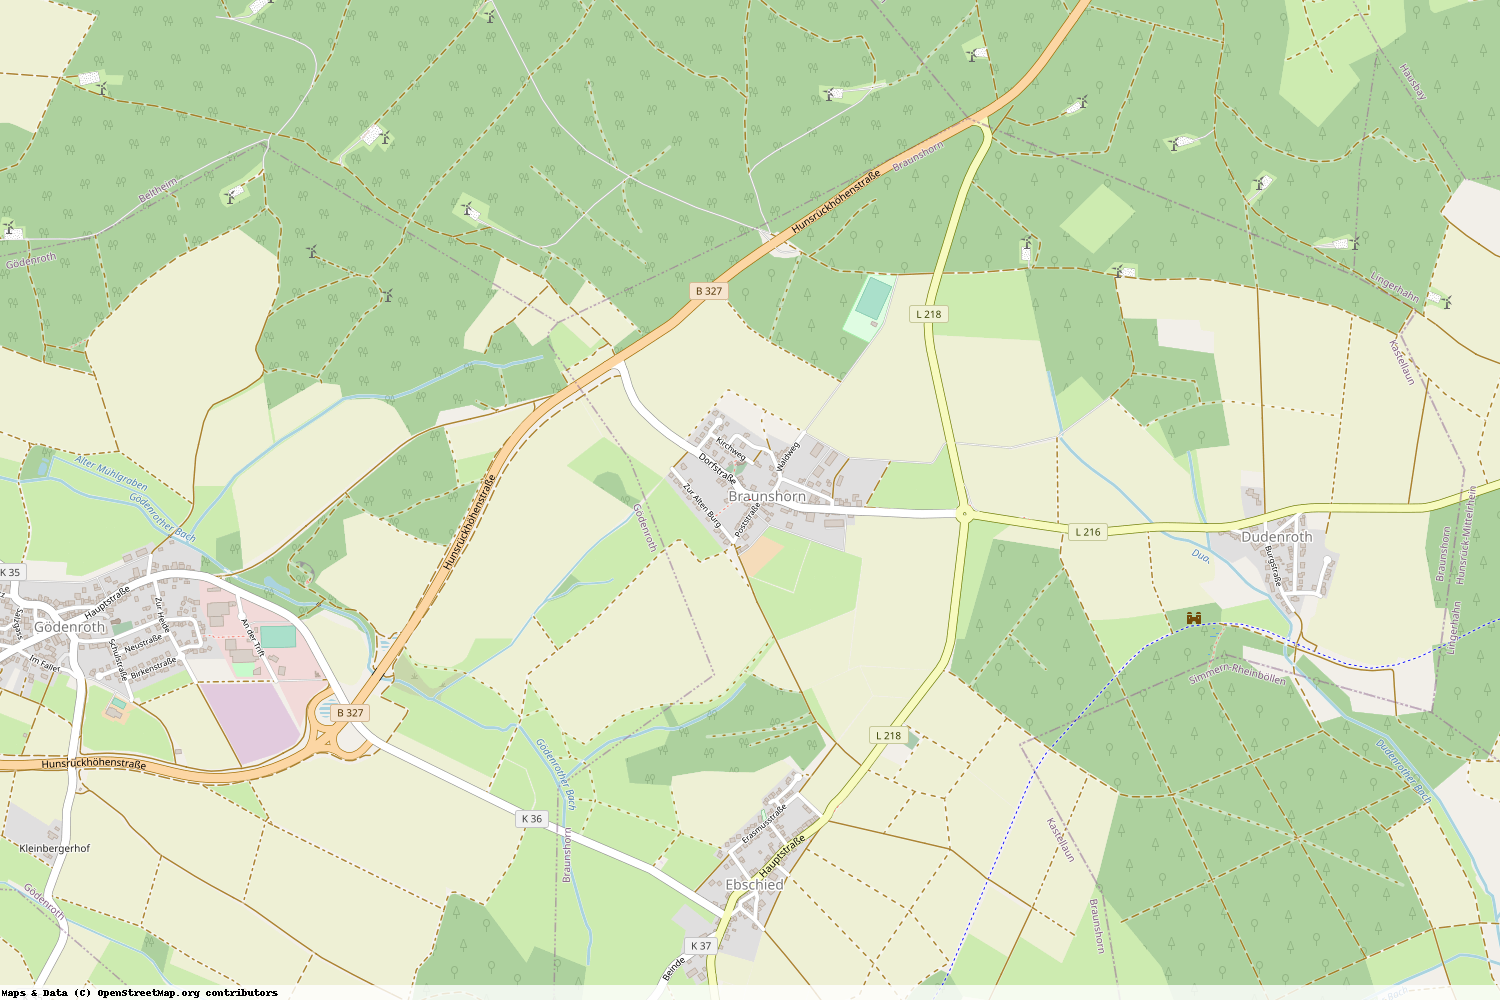 Ist gerade Stromausfall in Rheinland-Pfalz - Rhein-Hunsrück-Kreis - Braunshorn?